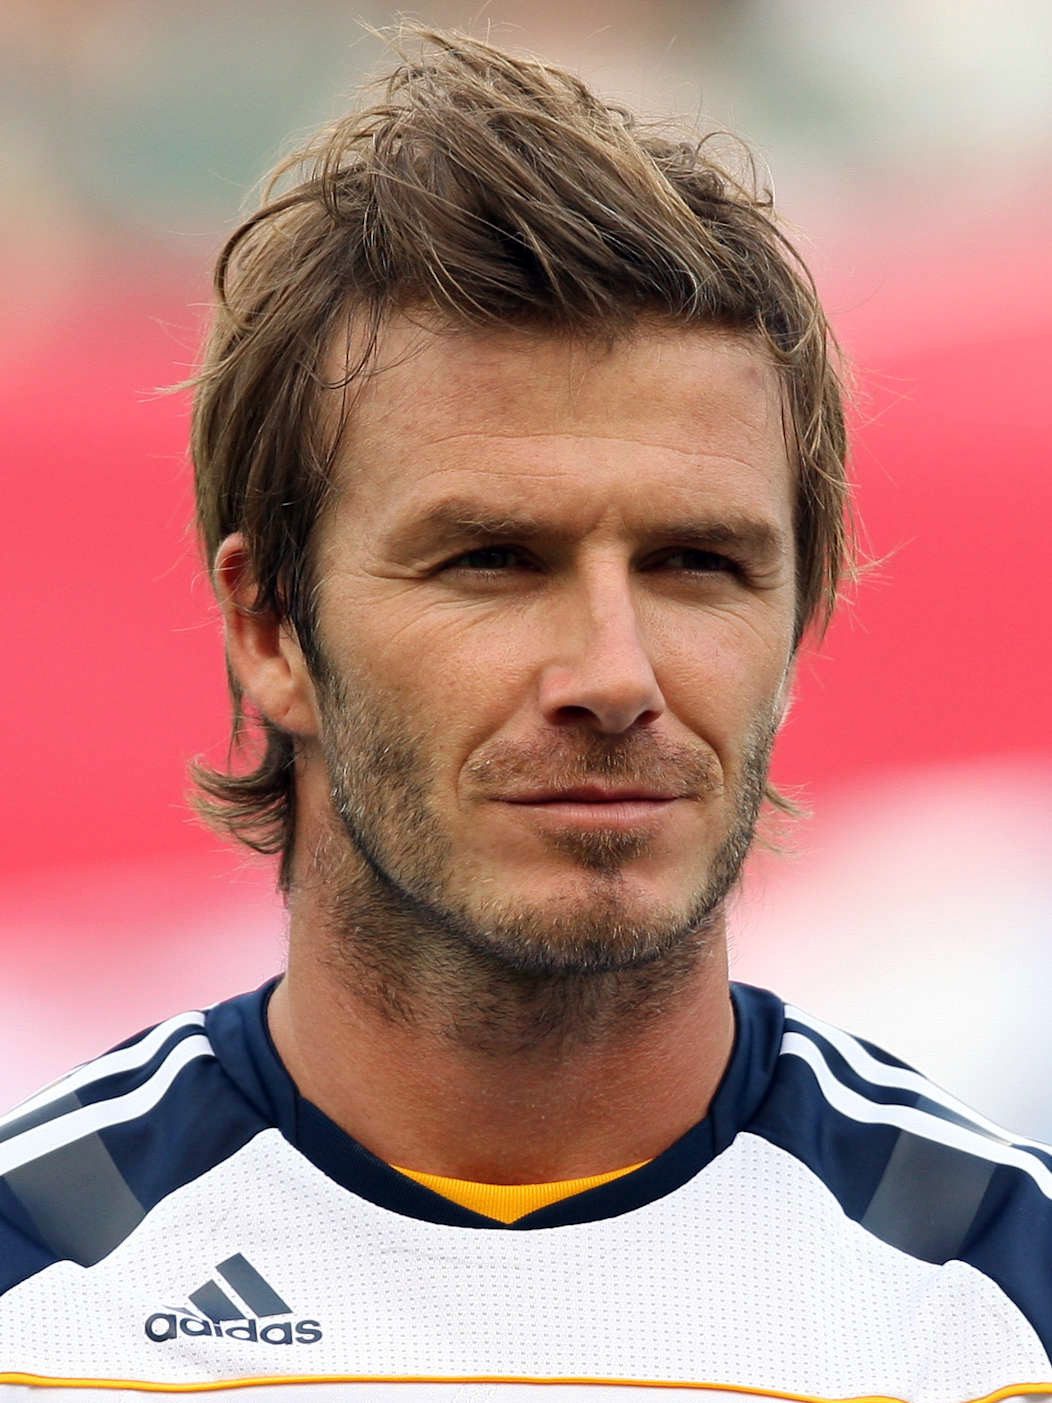 David Beckham's Modern Mullet